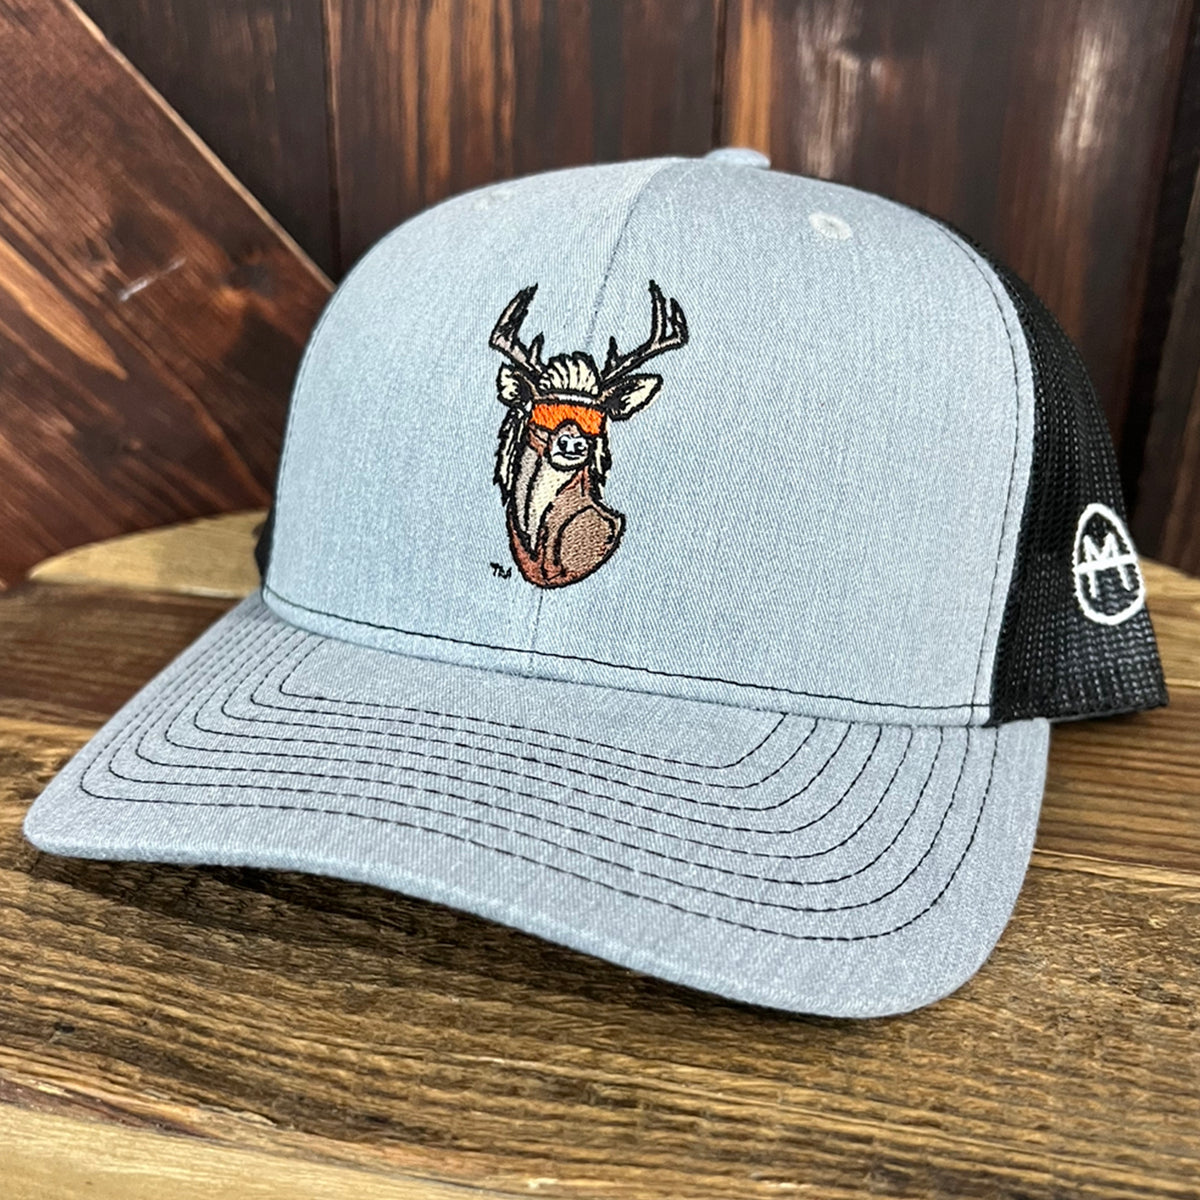 Deer Mullet Hat 2.0 - Heather Gray/Black – The Original Deer Mullet Shop